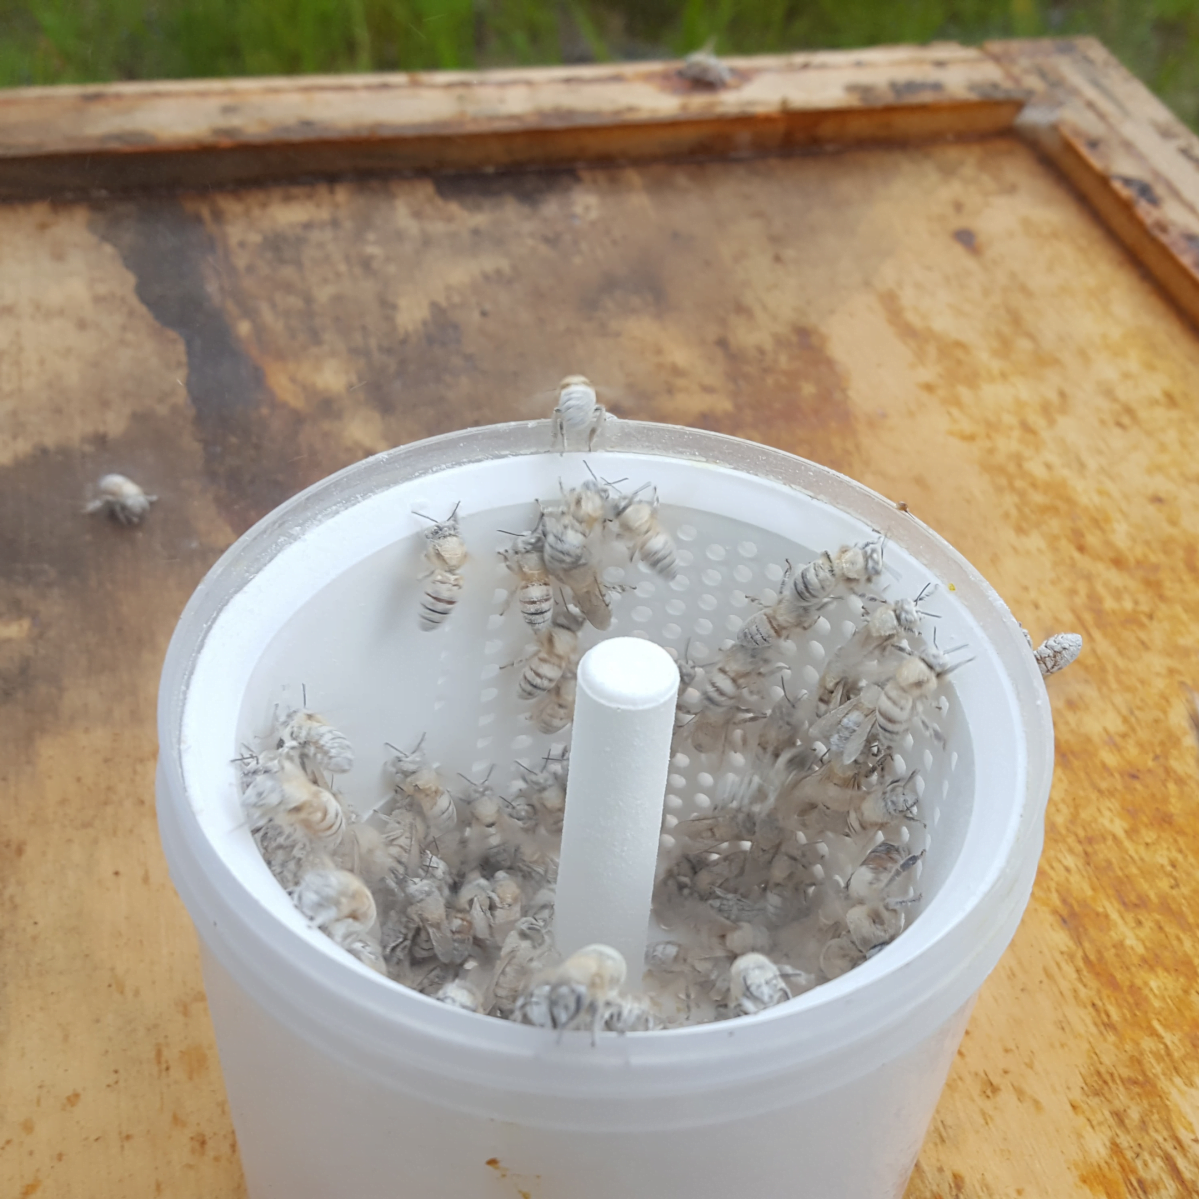 Varroa mites in powdered sugar